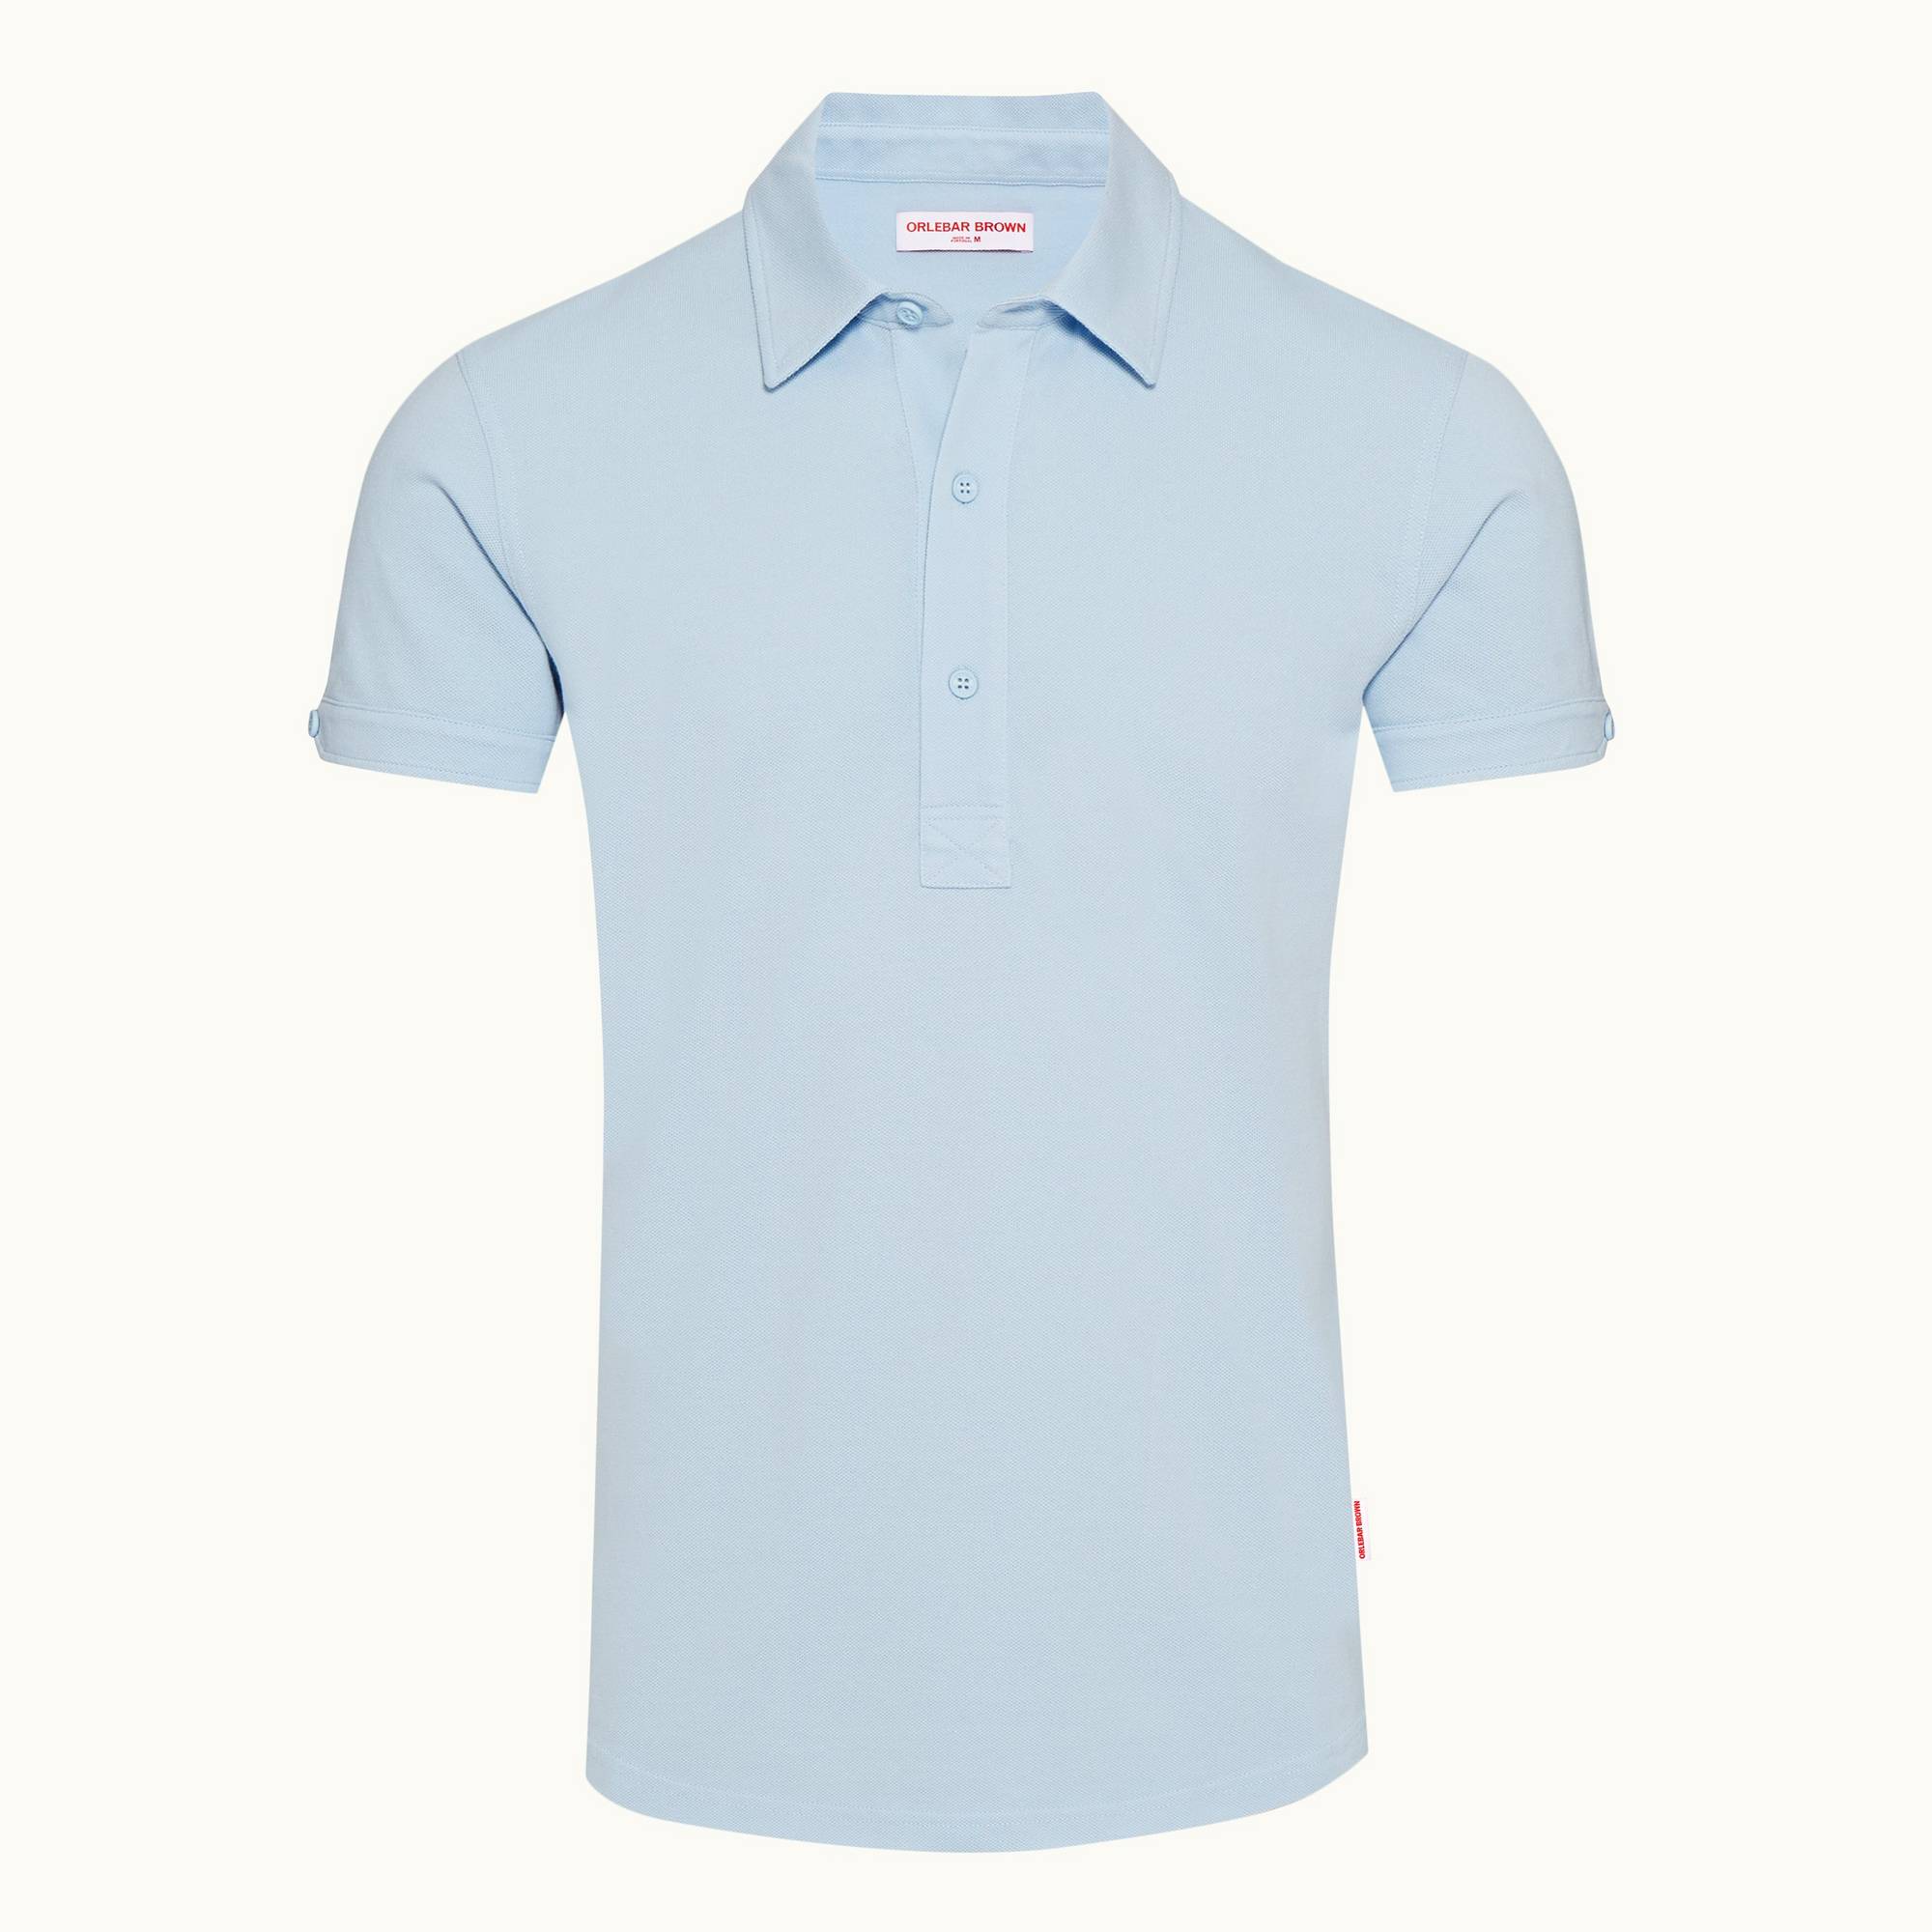 Sebastian - Mens Ice Blue Tailored Fit Cotton Polo Shirt